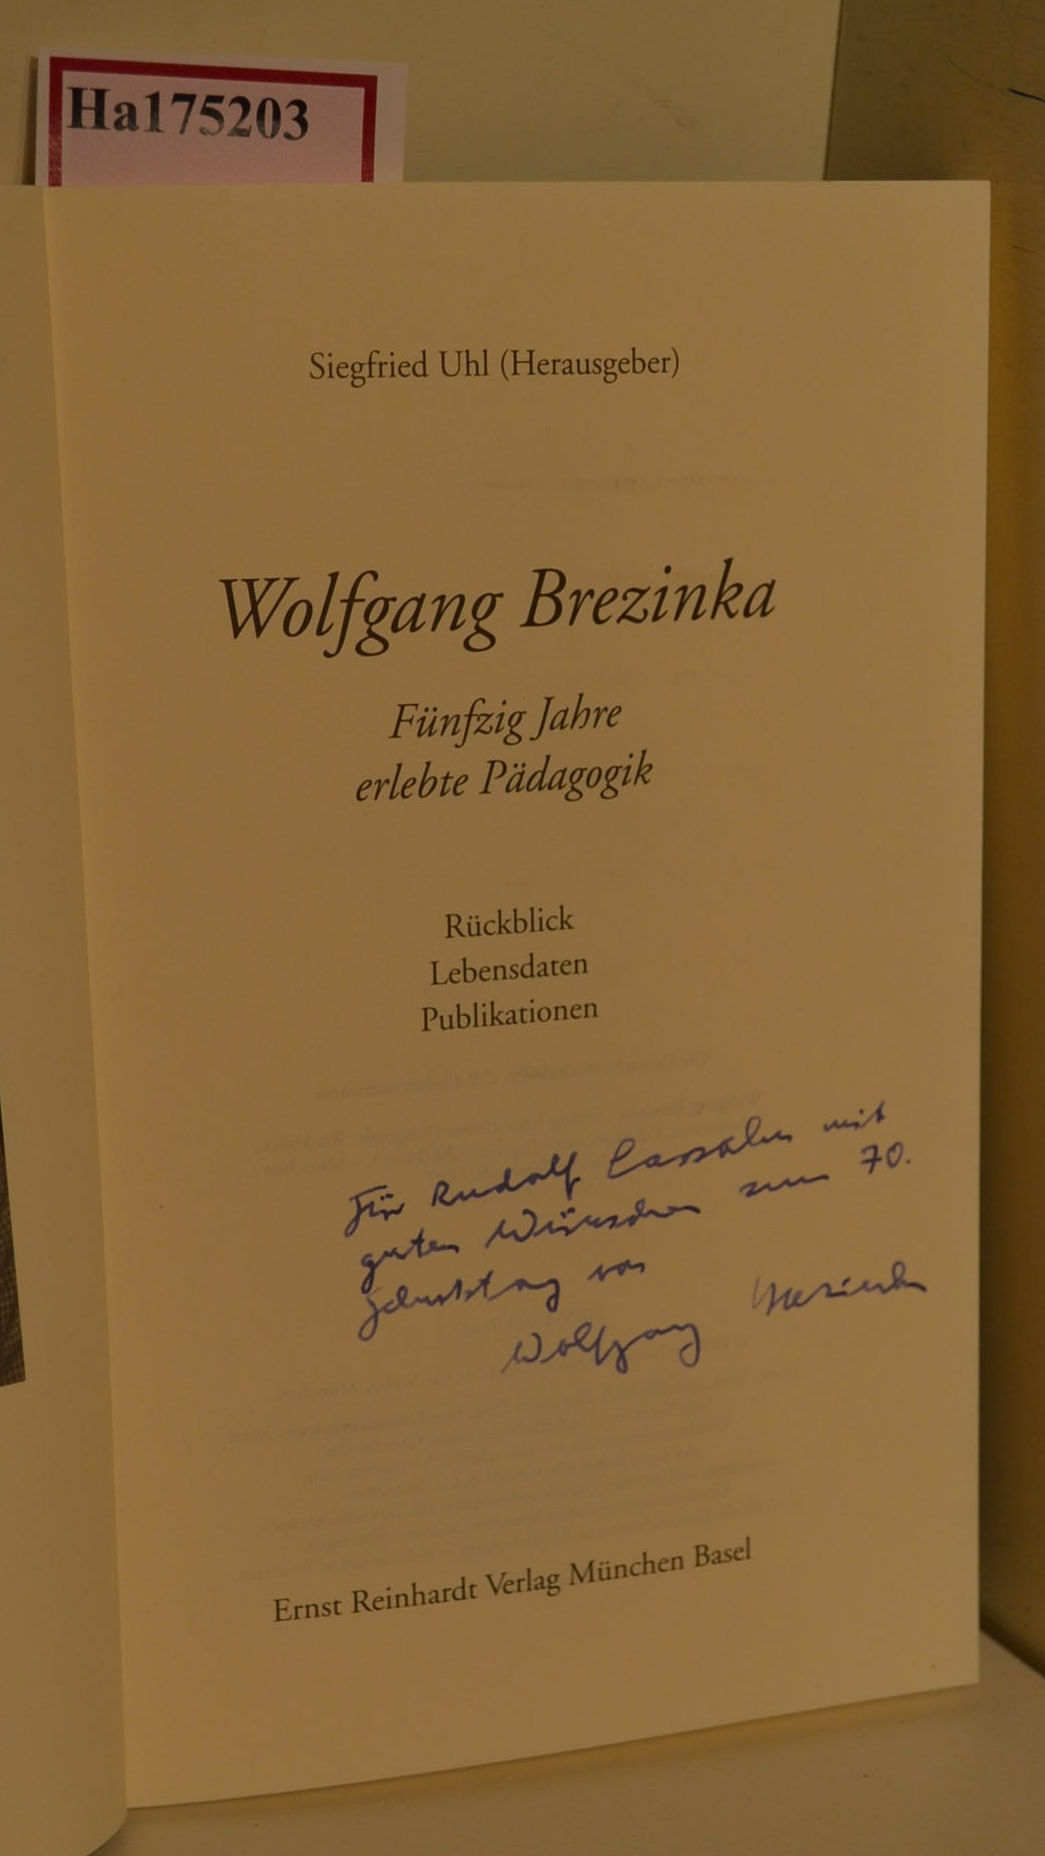 Wolfgang Brezinka - Fünfzig Jahre erlebte Pädagogik. Rückblick, Lebensdaten, Publikationen. - Uhl, Siegfried ( Hrg. )